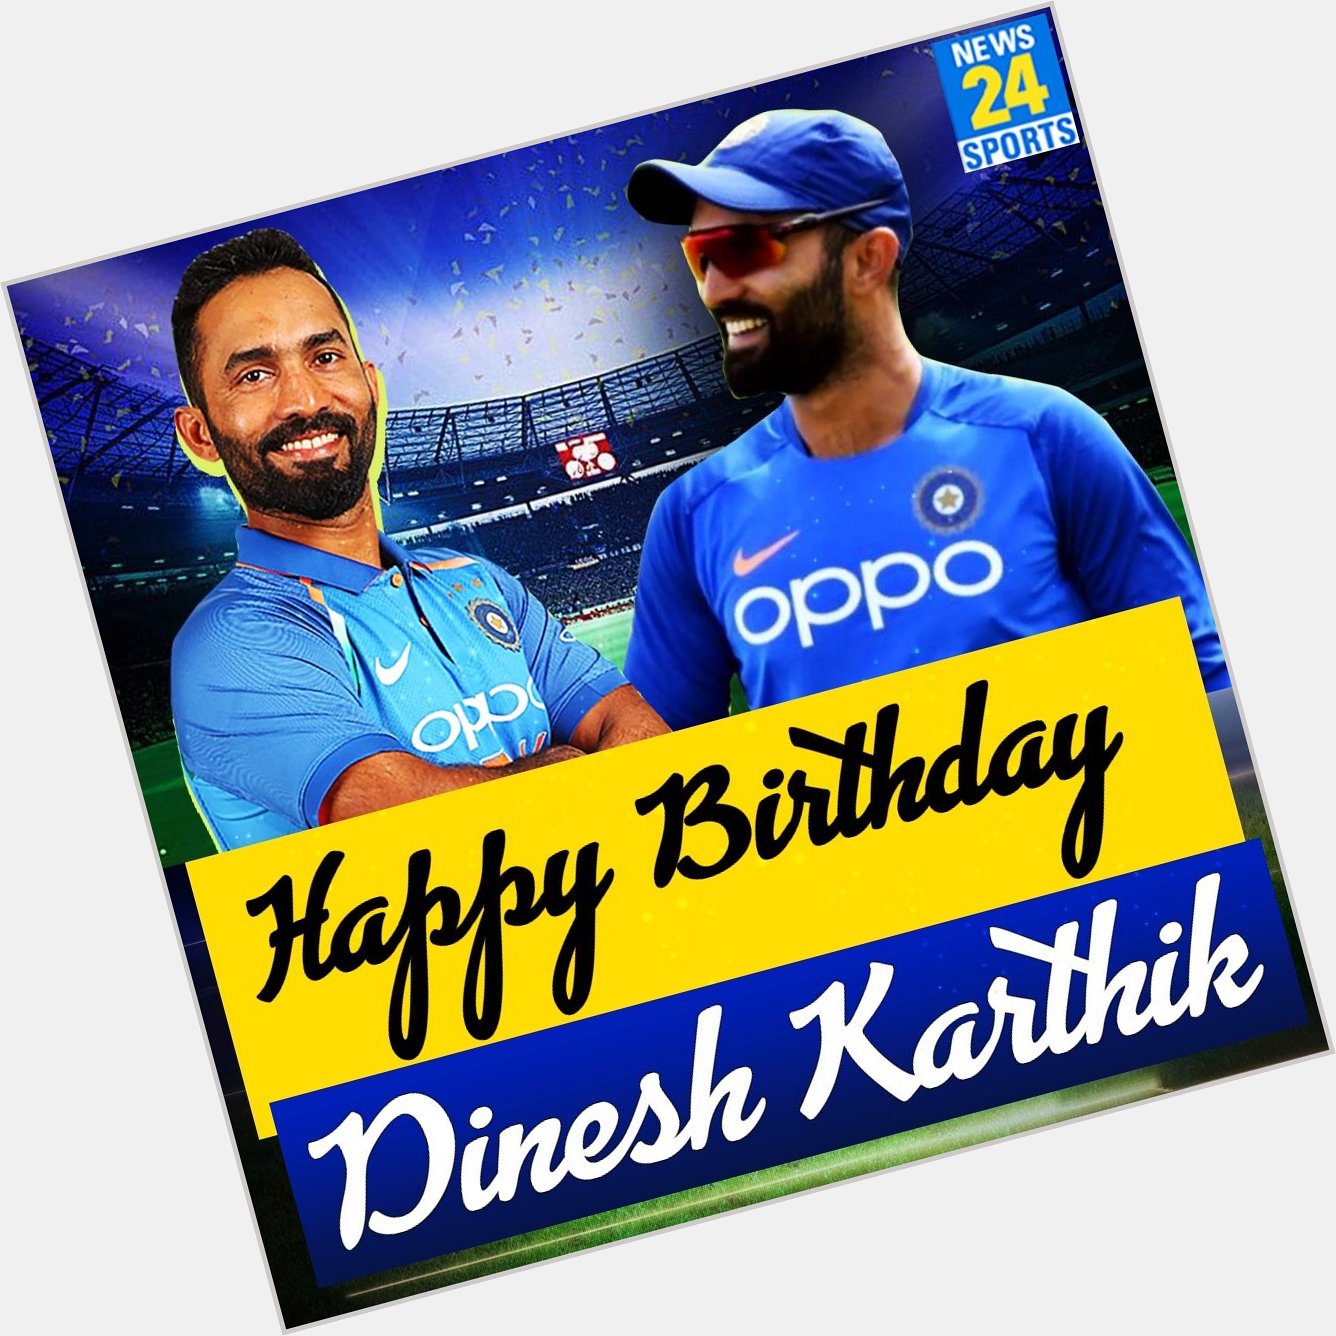 Wishing  Dinesh Karthik a very happy birthday  